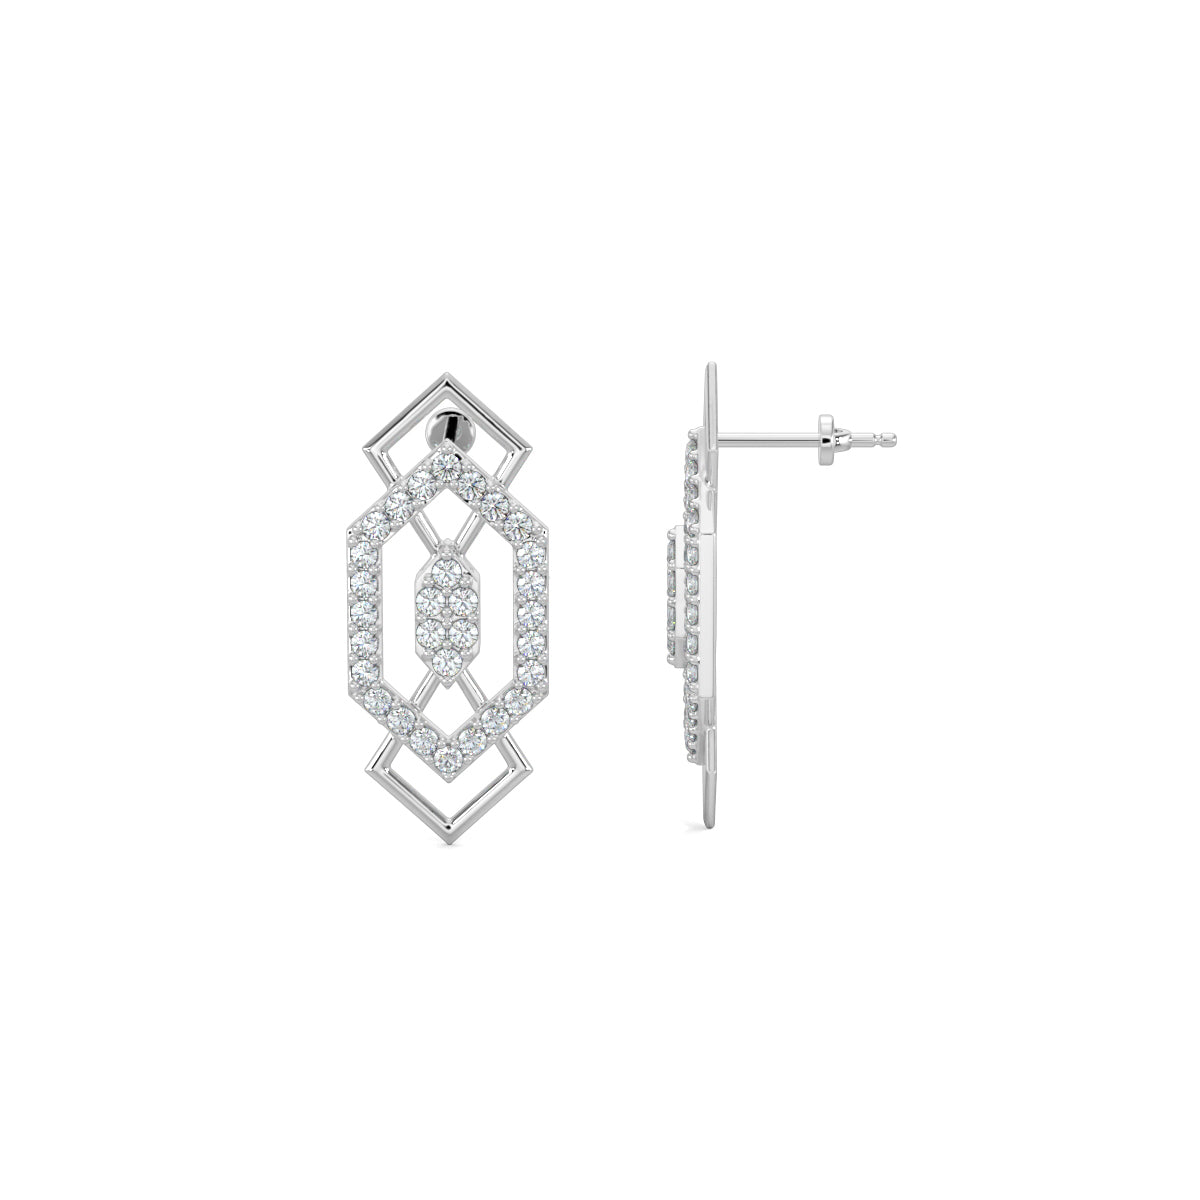 White Gold, Diamond earrings, mid-length earrings, elegant drop earrings, sparkling diamond jewelry